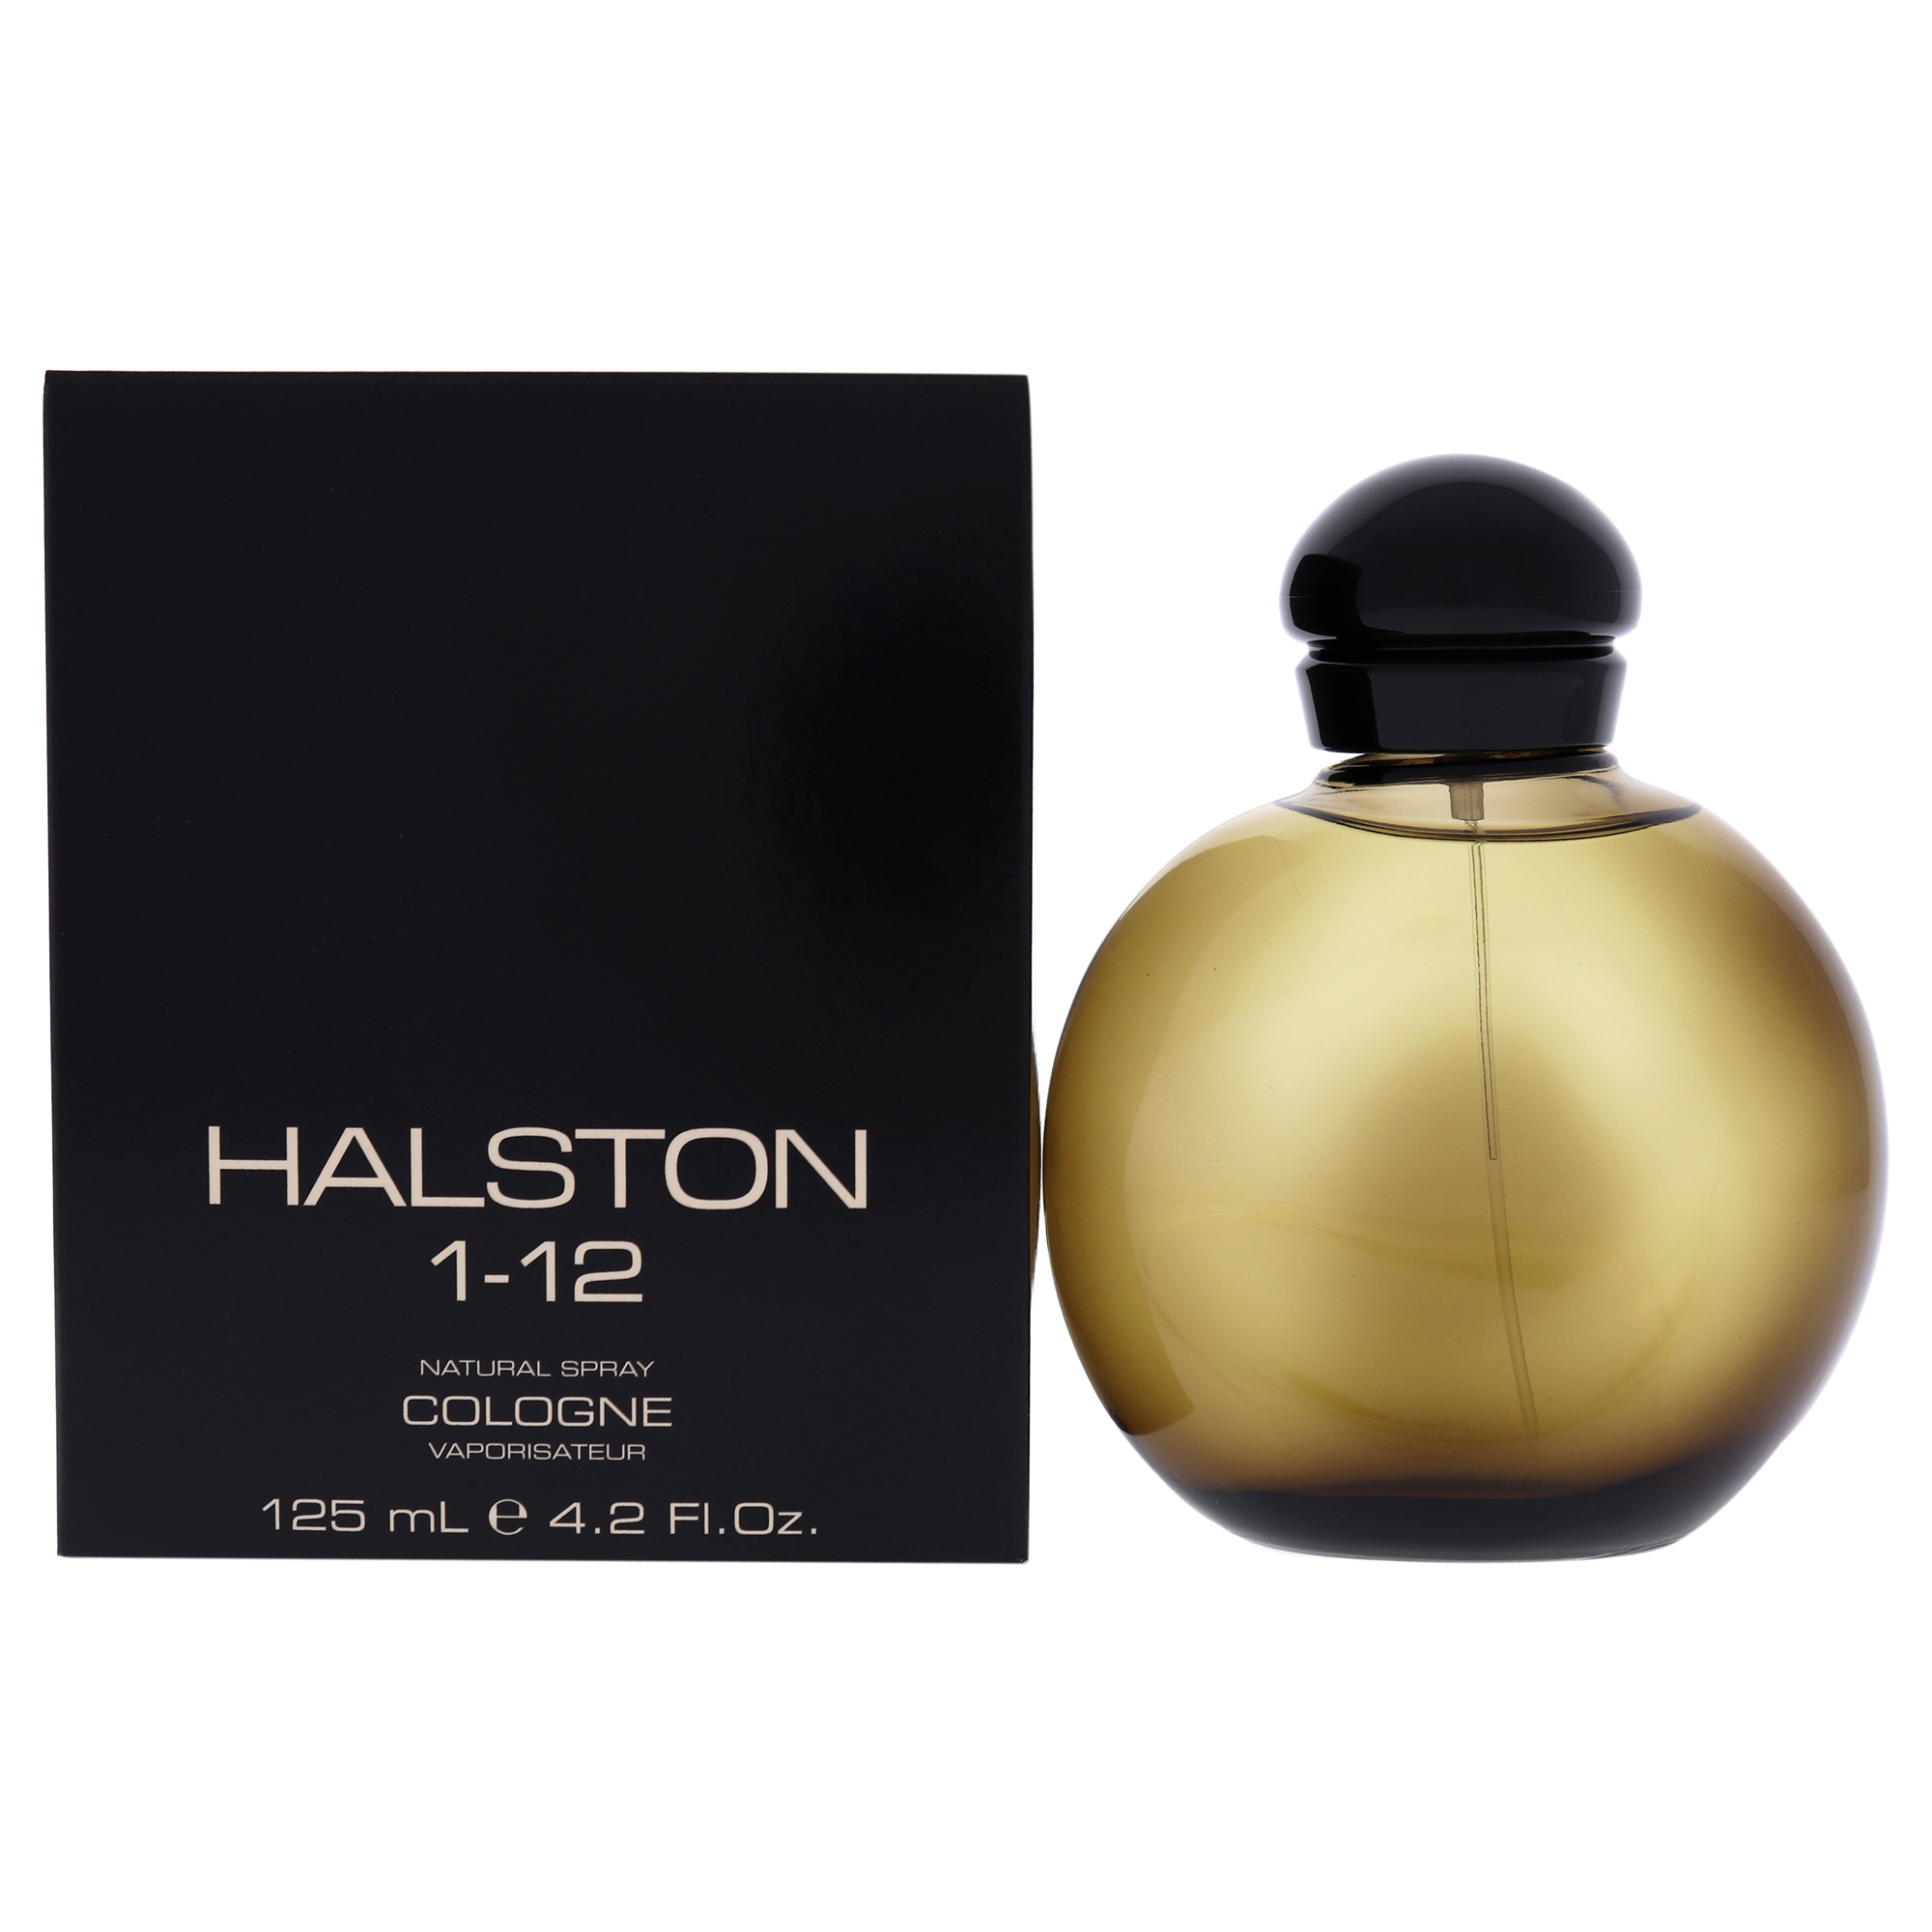 Halston 1-12 by Halston for Men - 4.2 oz Cologne Spray